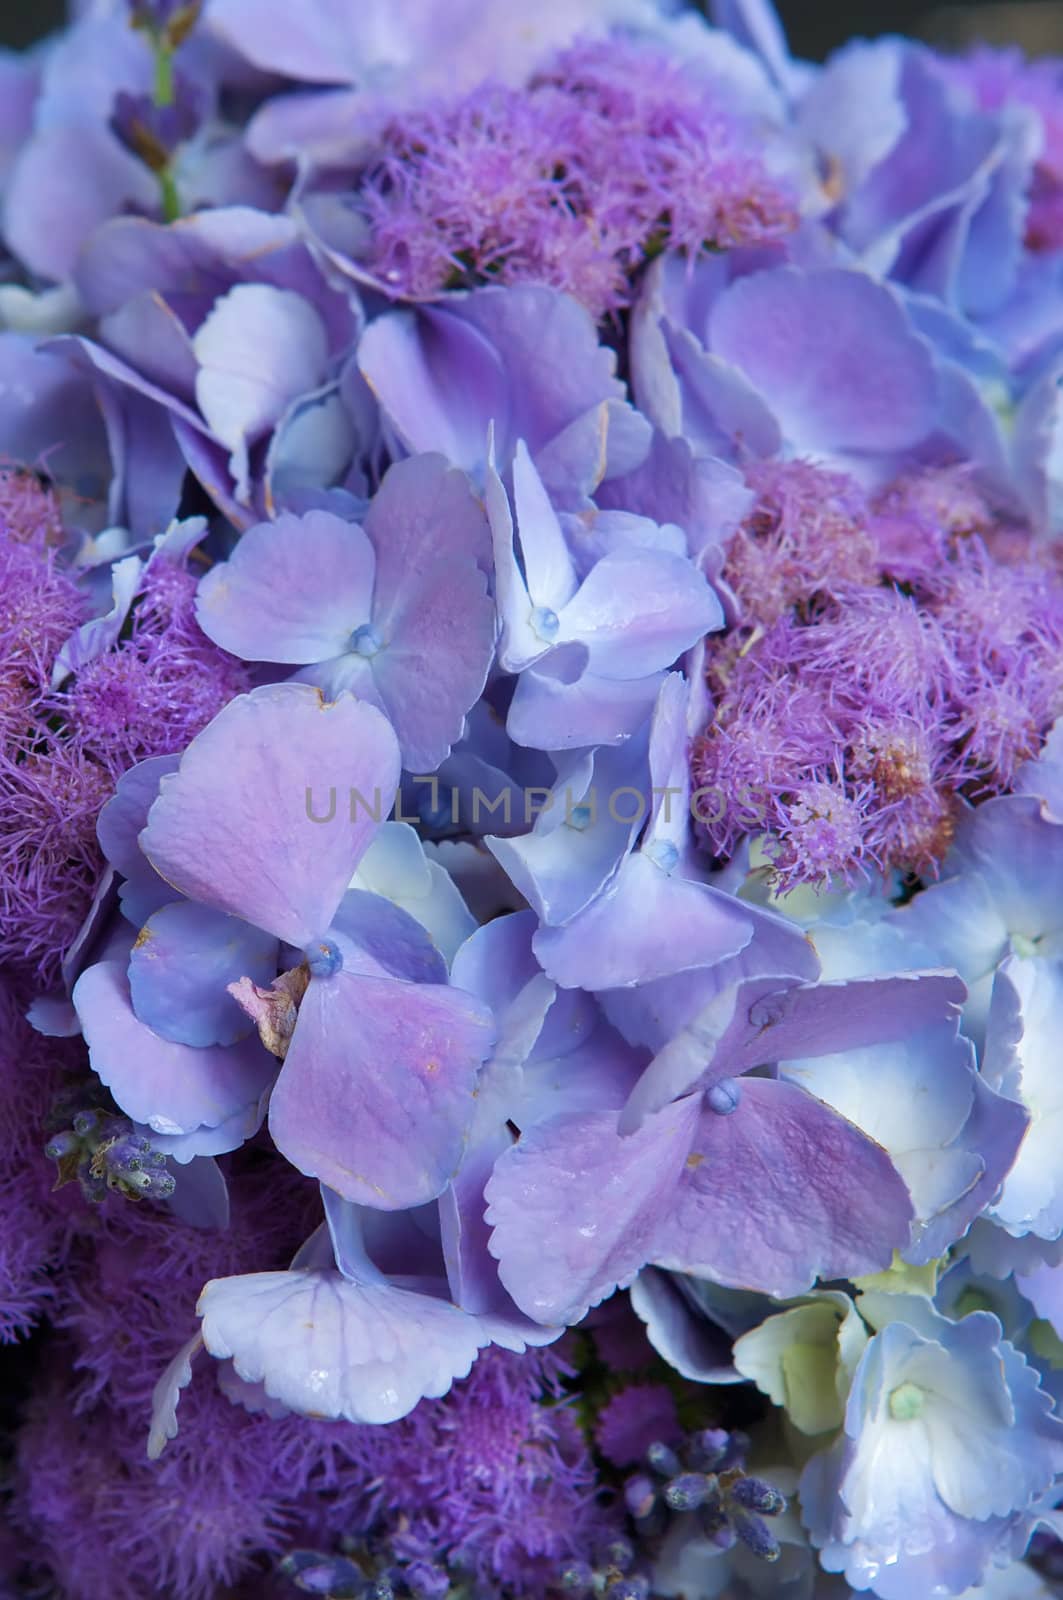 A colorful purple bridal bouquet of flowers by Deimages